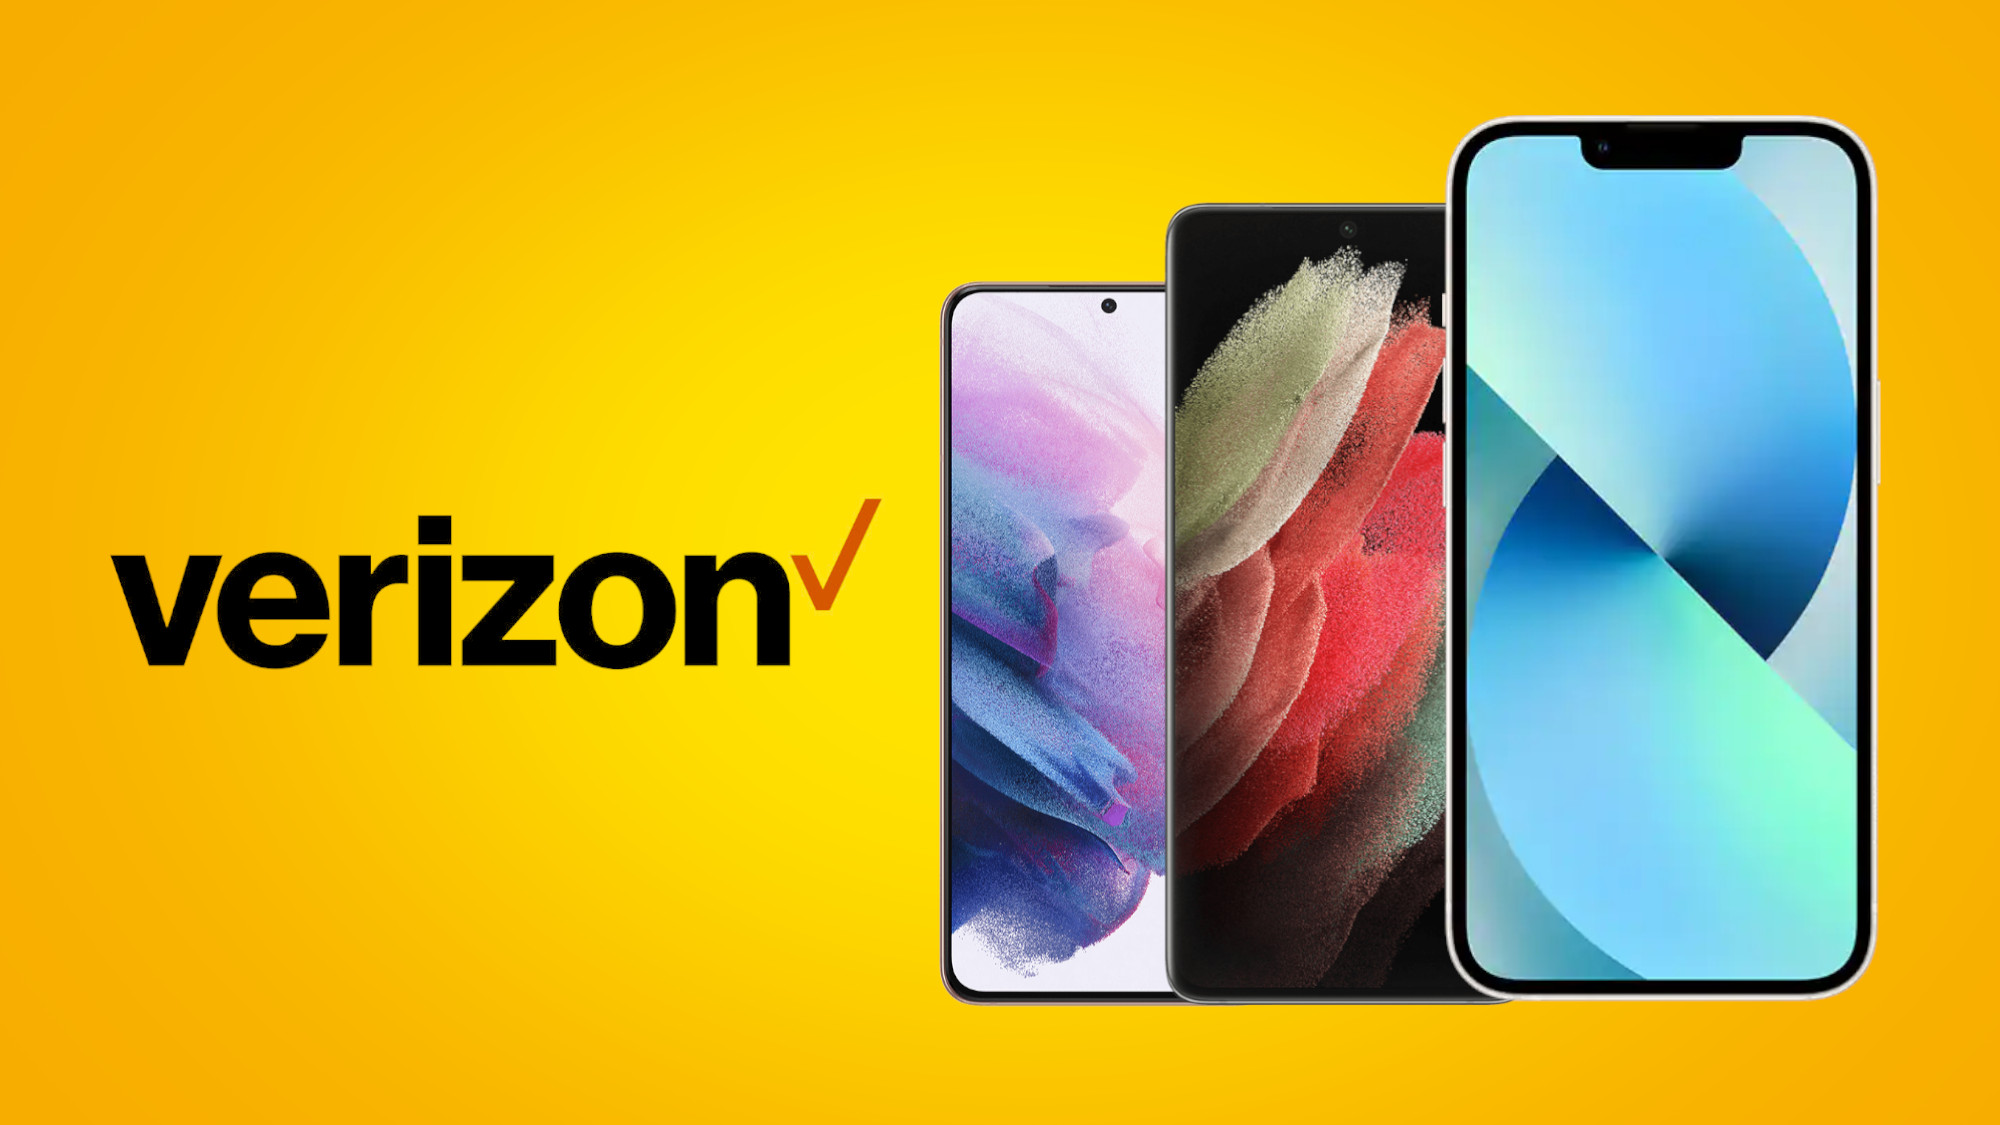 The best Verizon deals for August 2022 free iPhones, discounts on